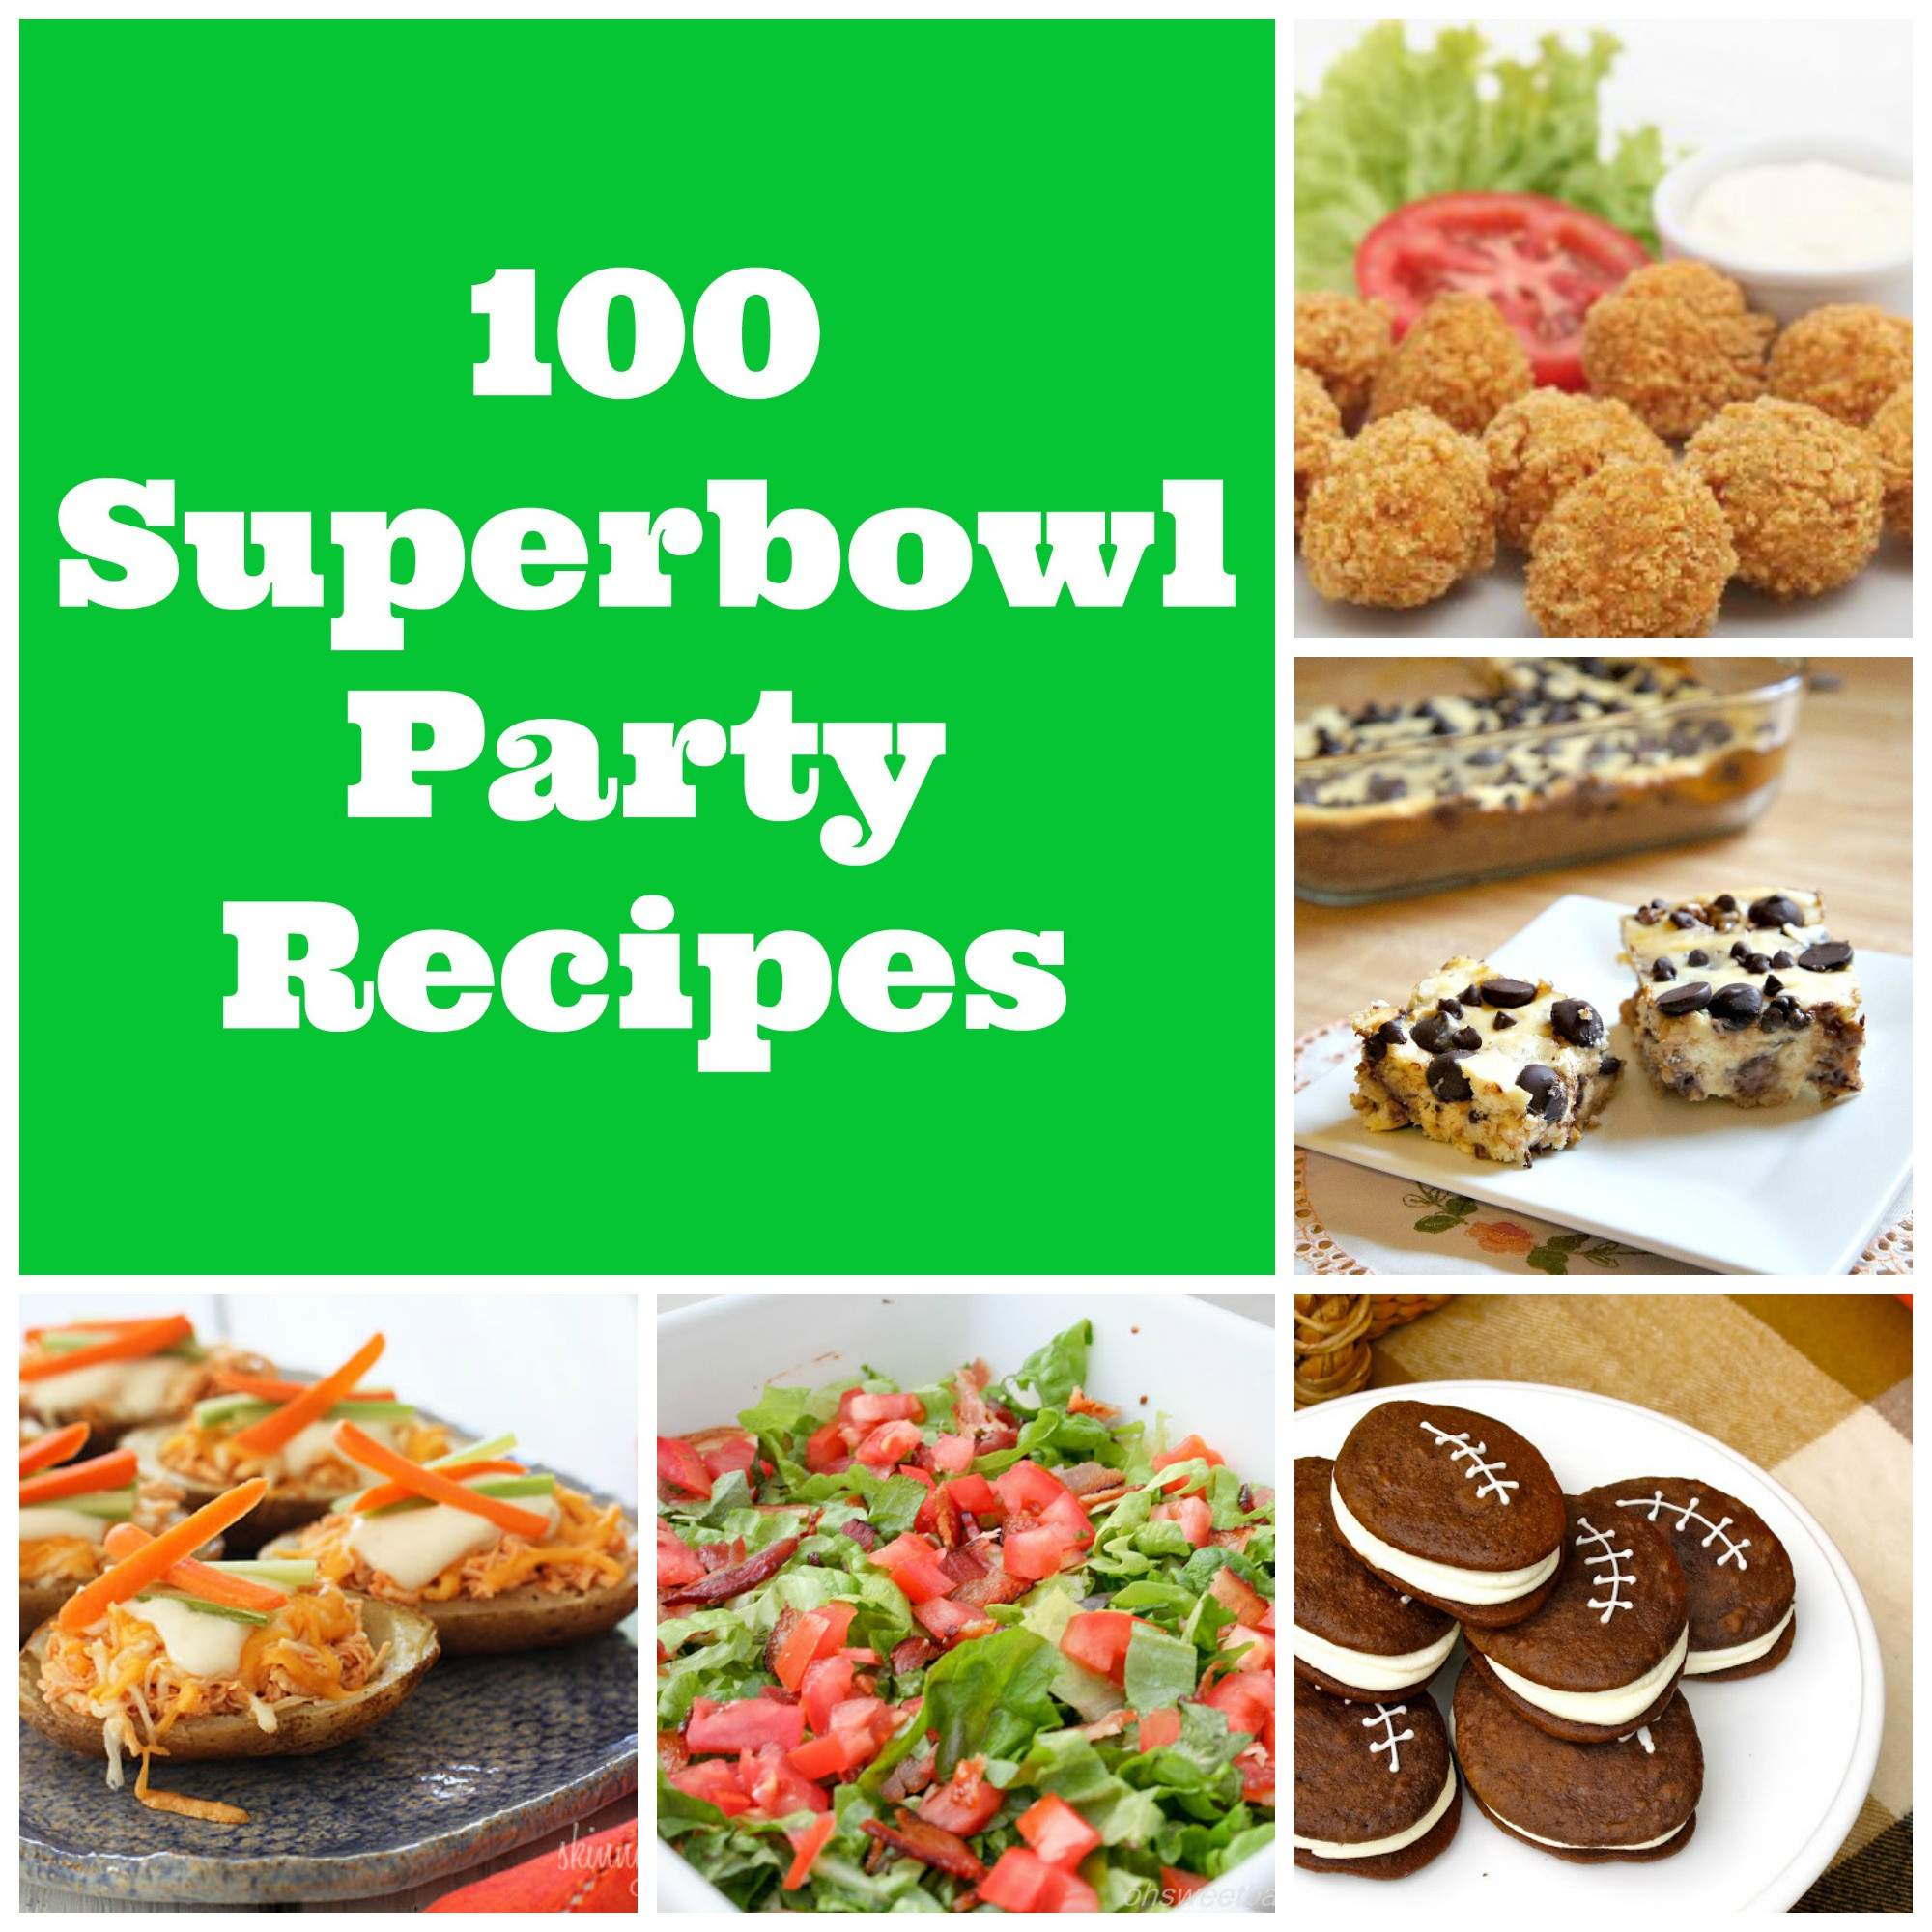 Super Bowl Party Menu Ideas Recipes
 100 Super Bowl Party Recipe Ideas My Suburban Kitchen